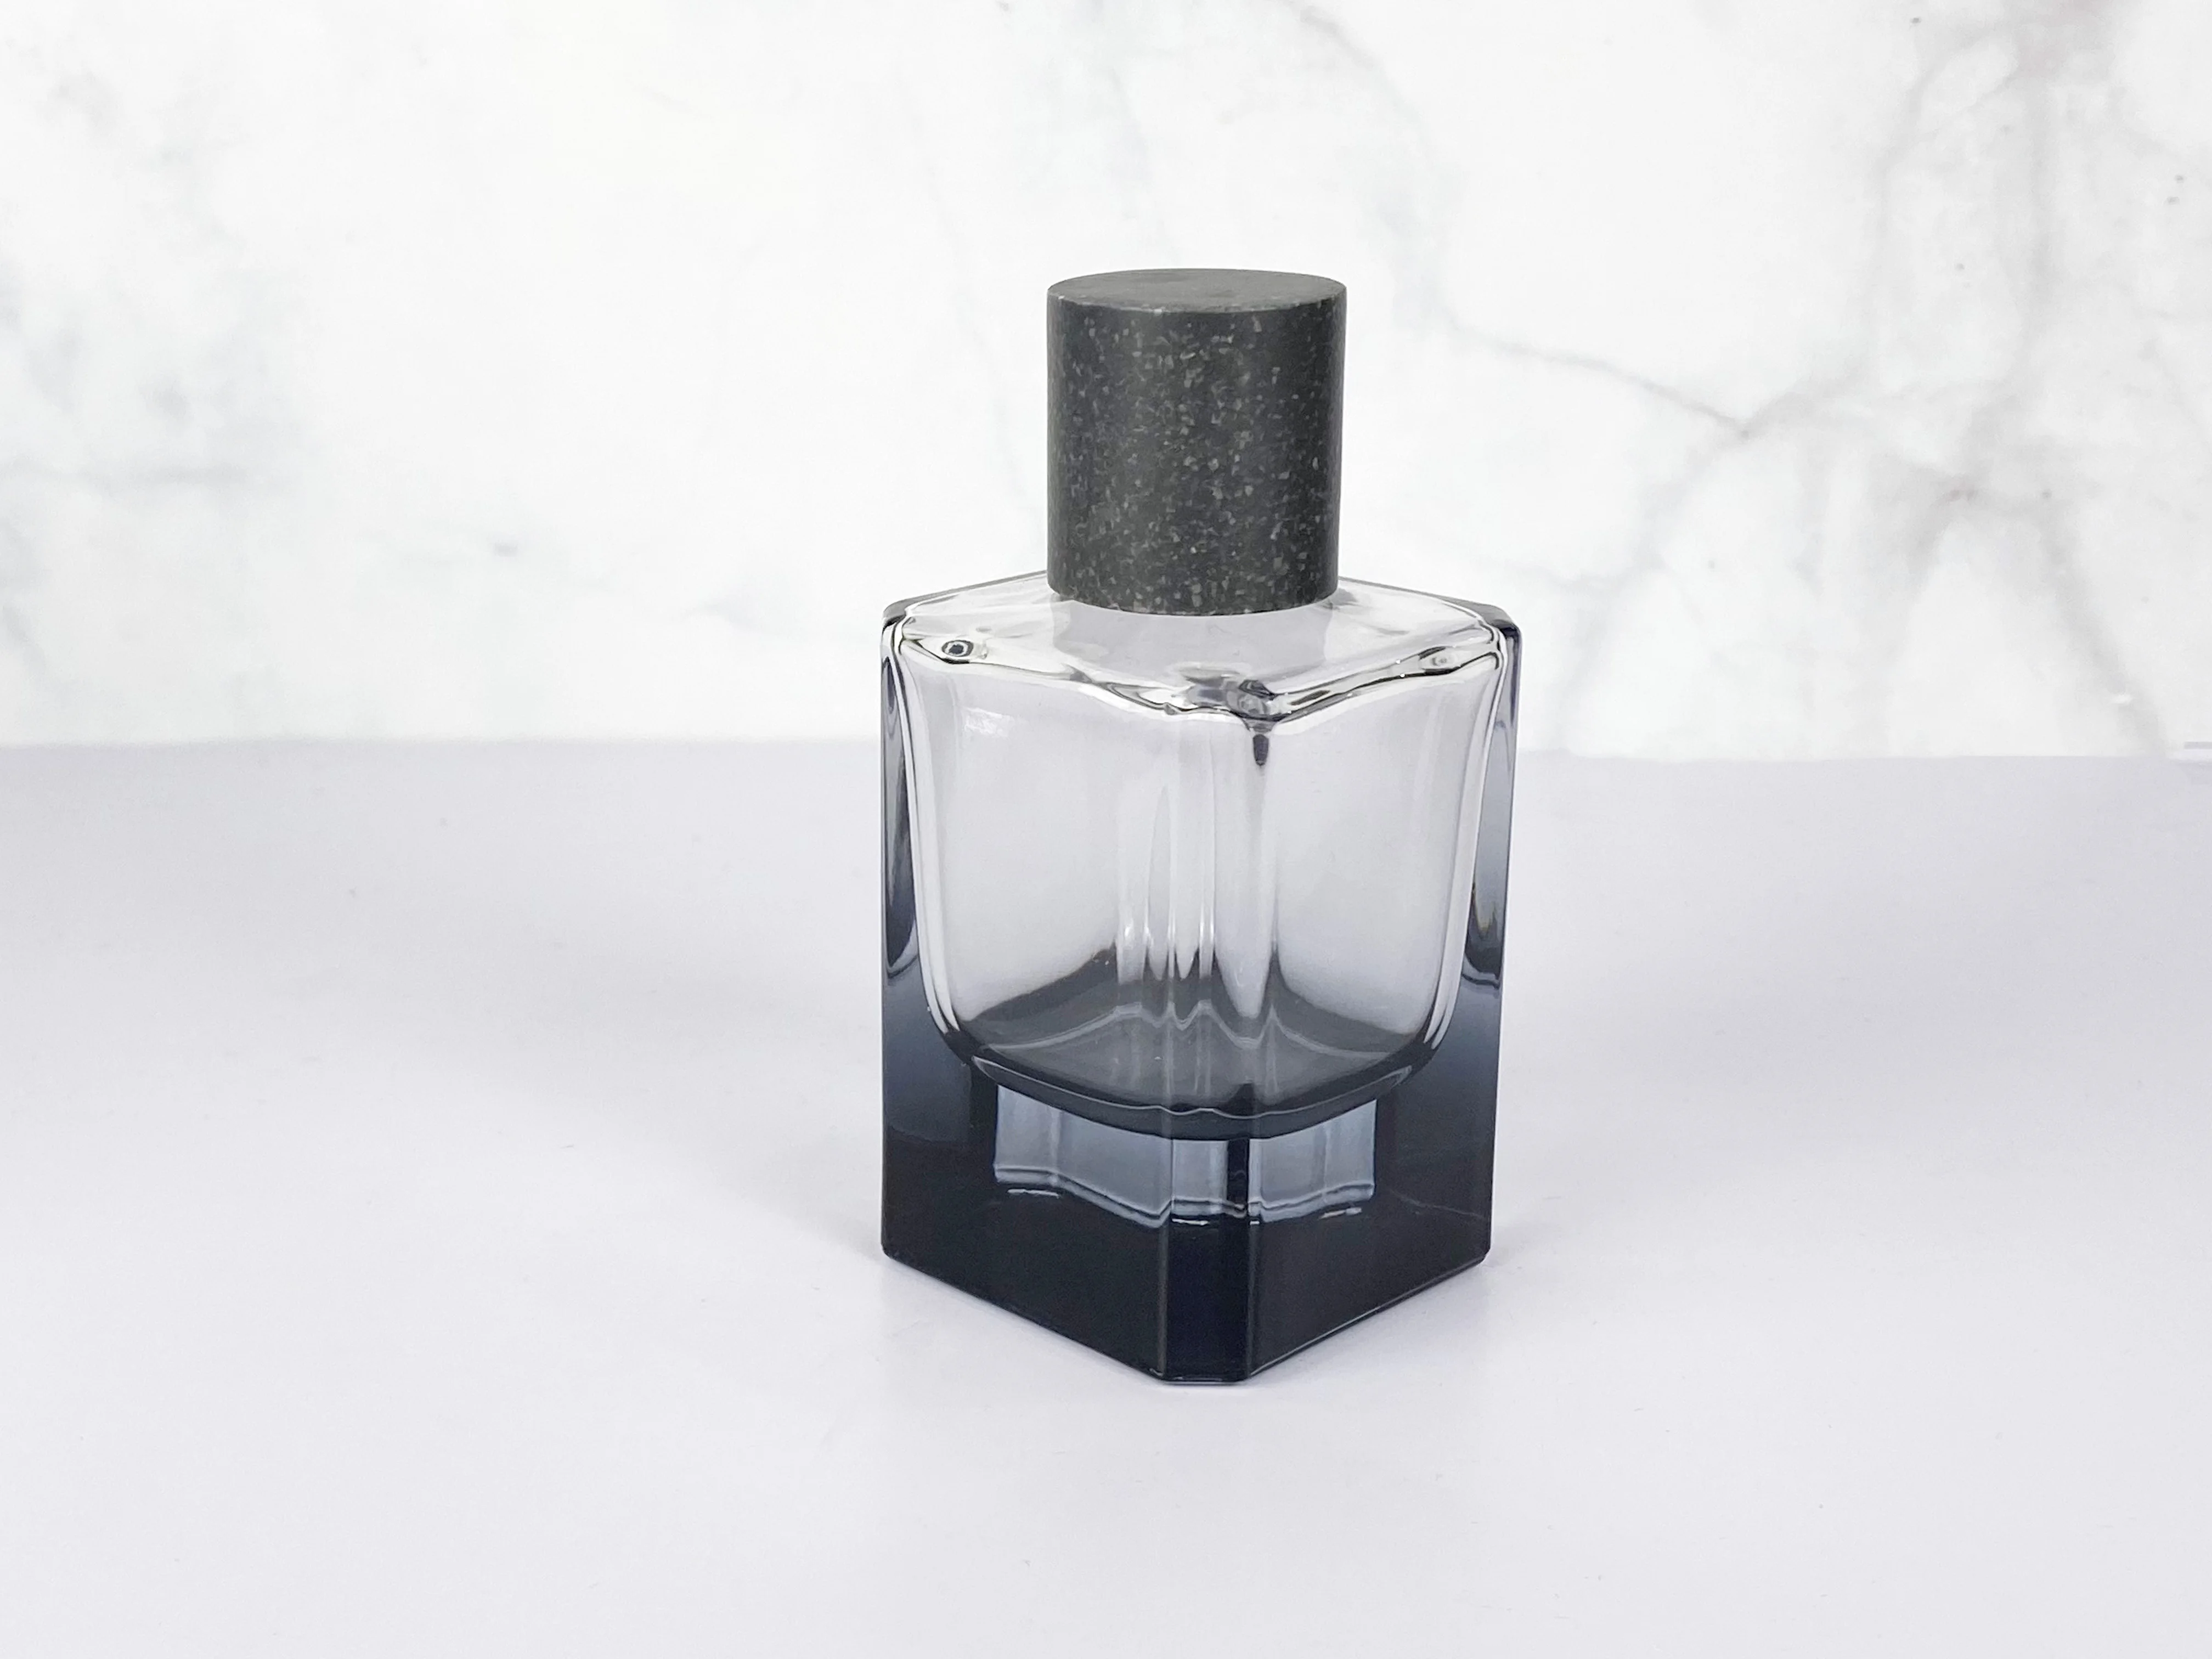 50 ml glass perfume bottle with perfume caps